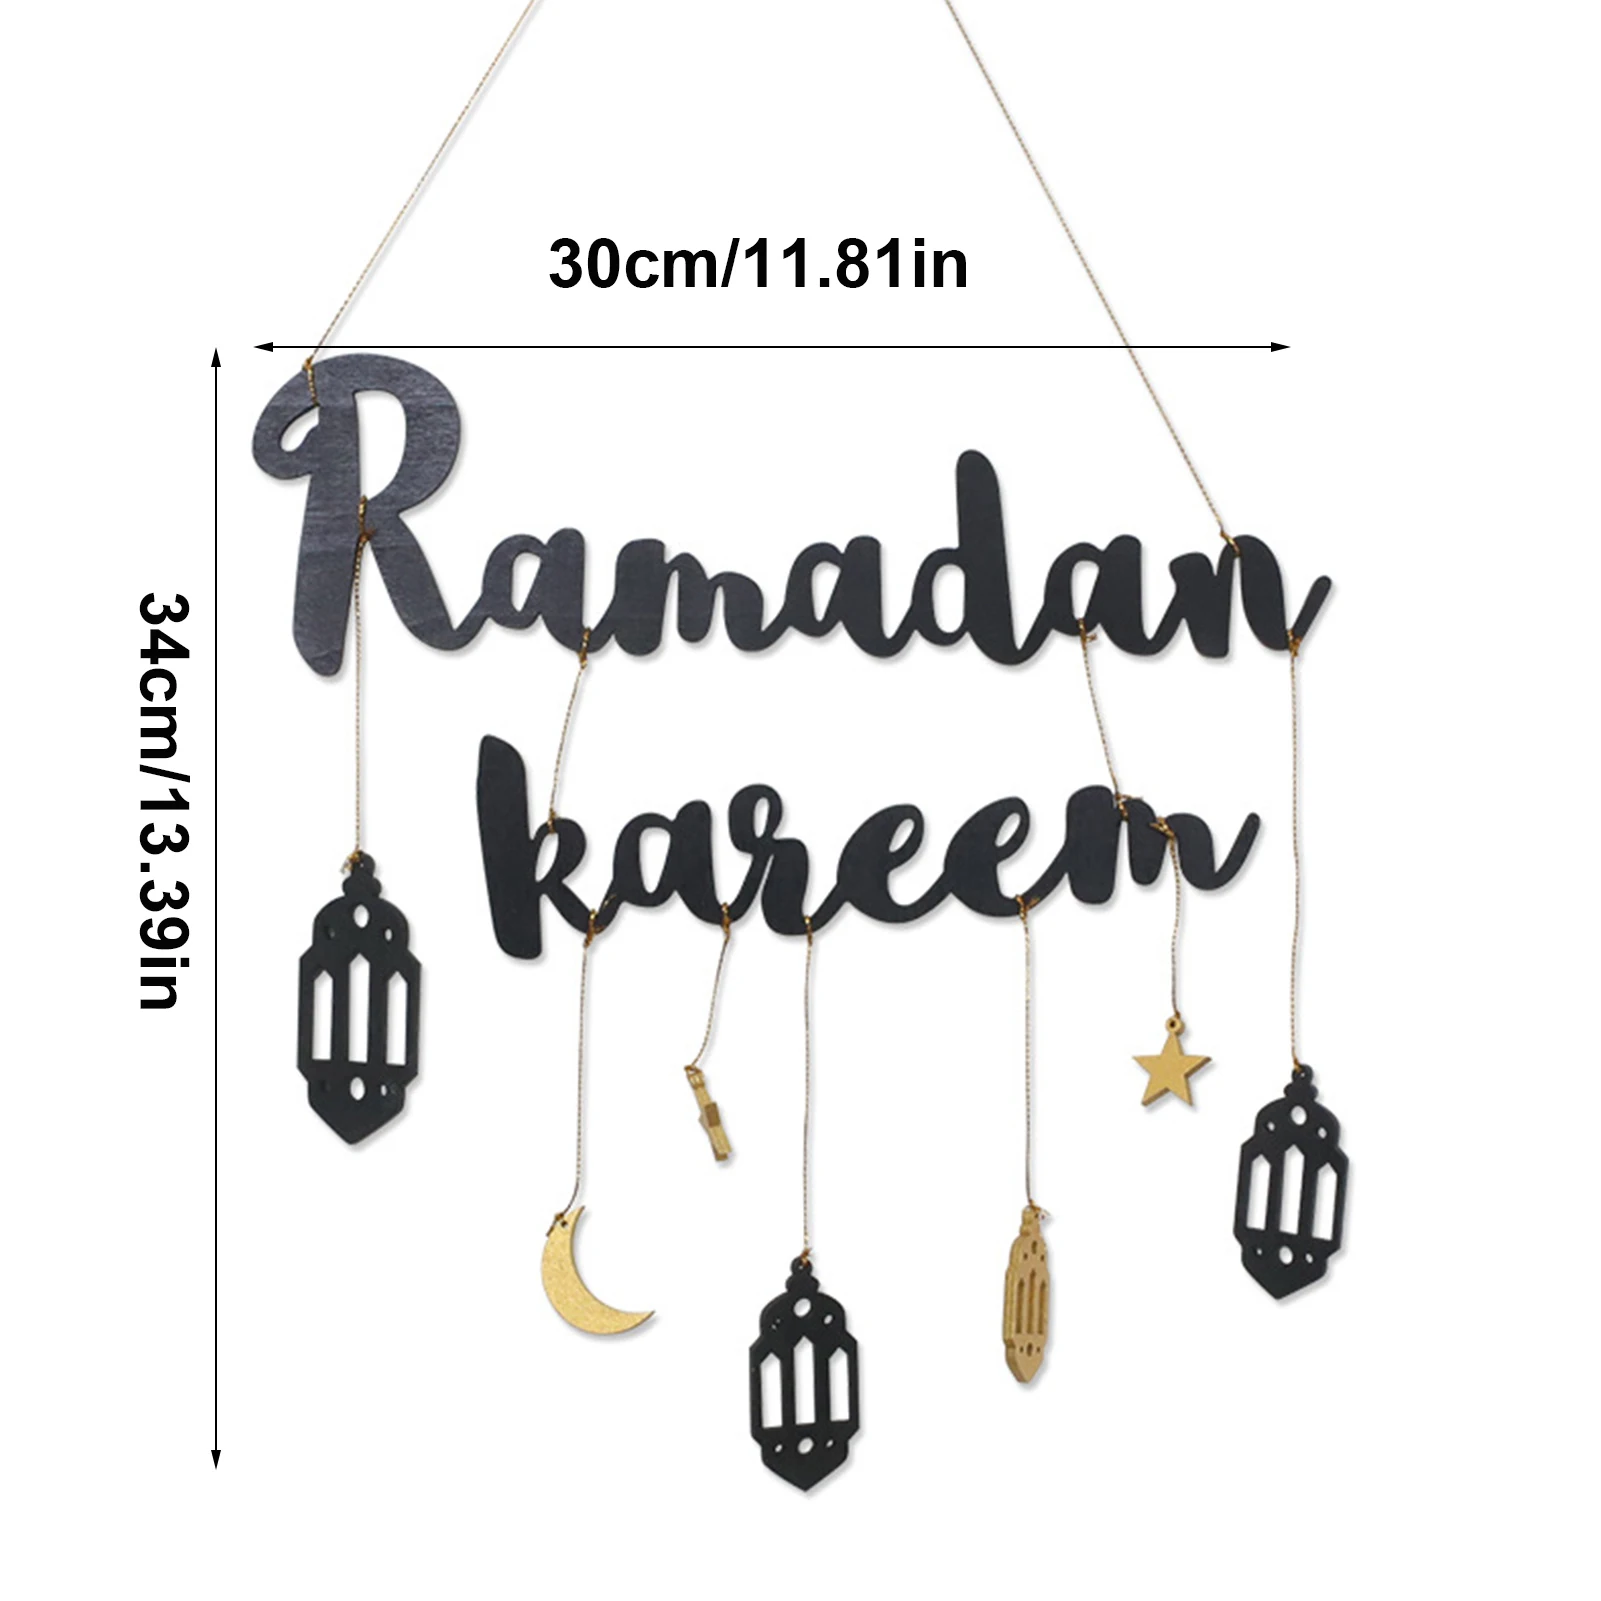 2022 Ramadan Decoration Pendant Muslim Islamic Ramadan Kareem Letters Wall Hanging Decor Star Moon Party Decor Gift Eid Mubarak